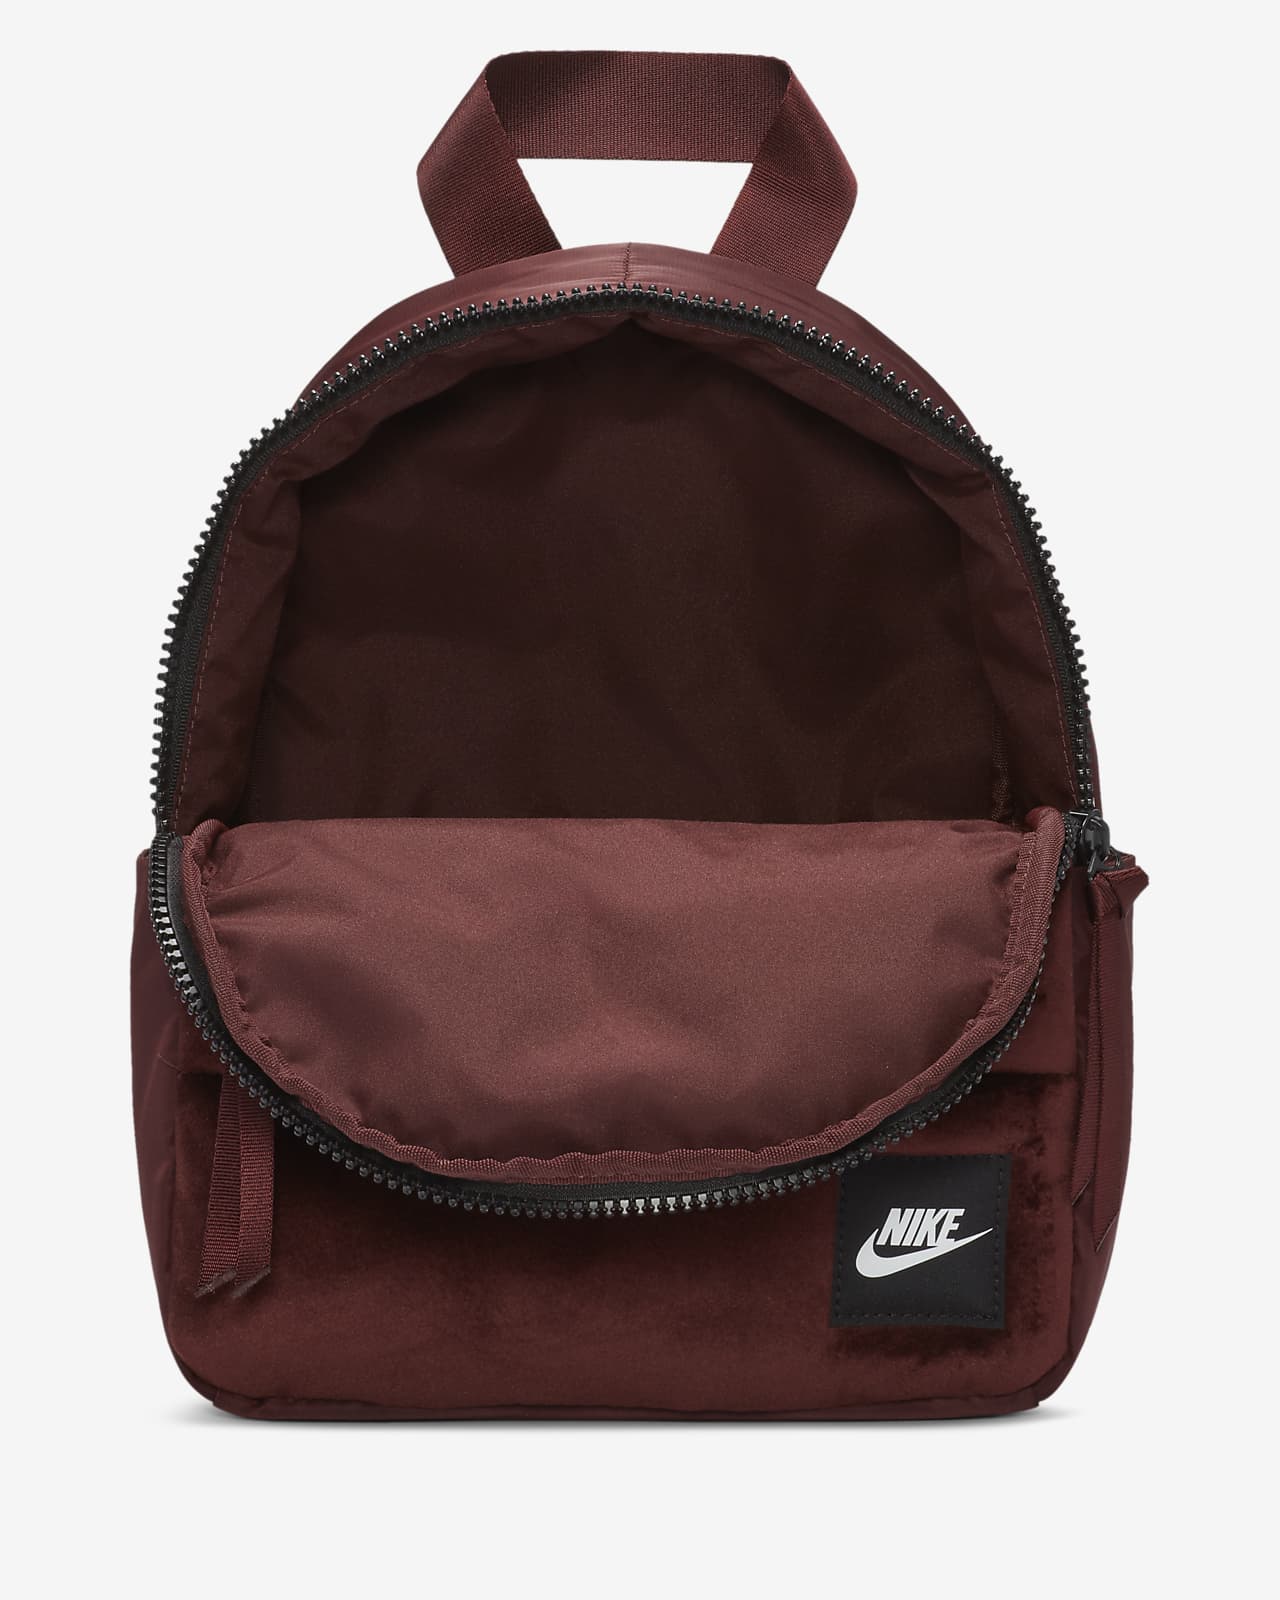 vapormax backpack